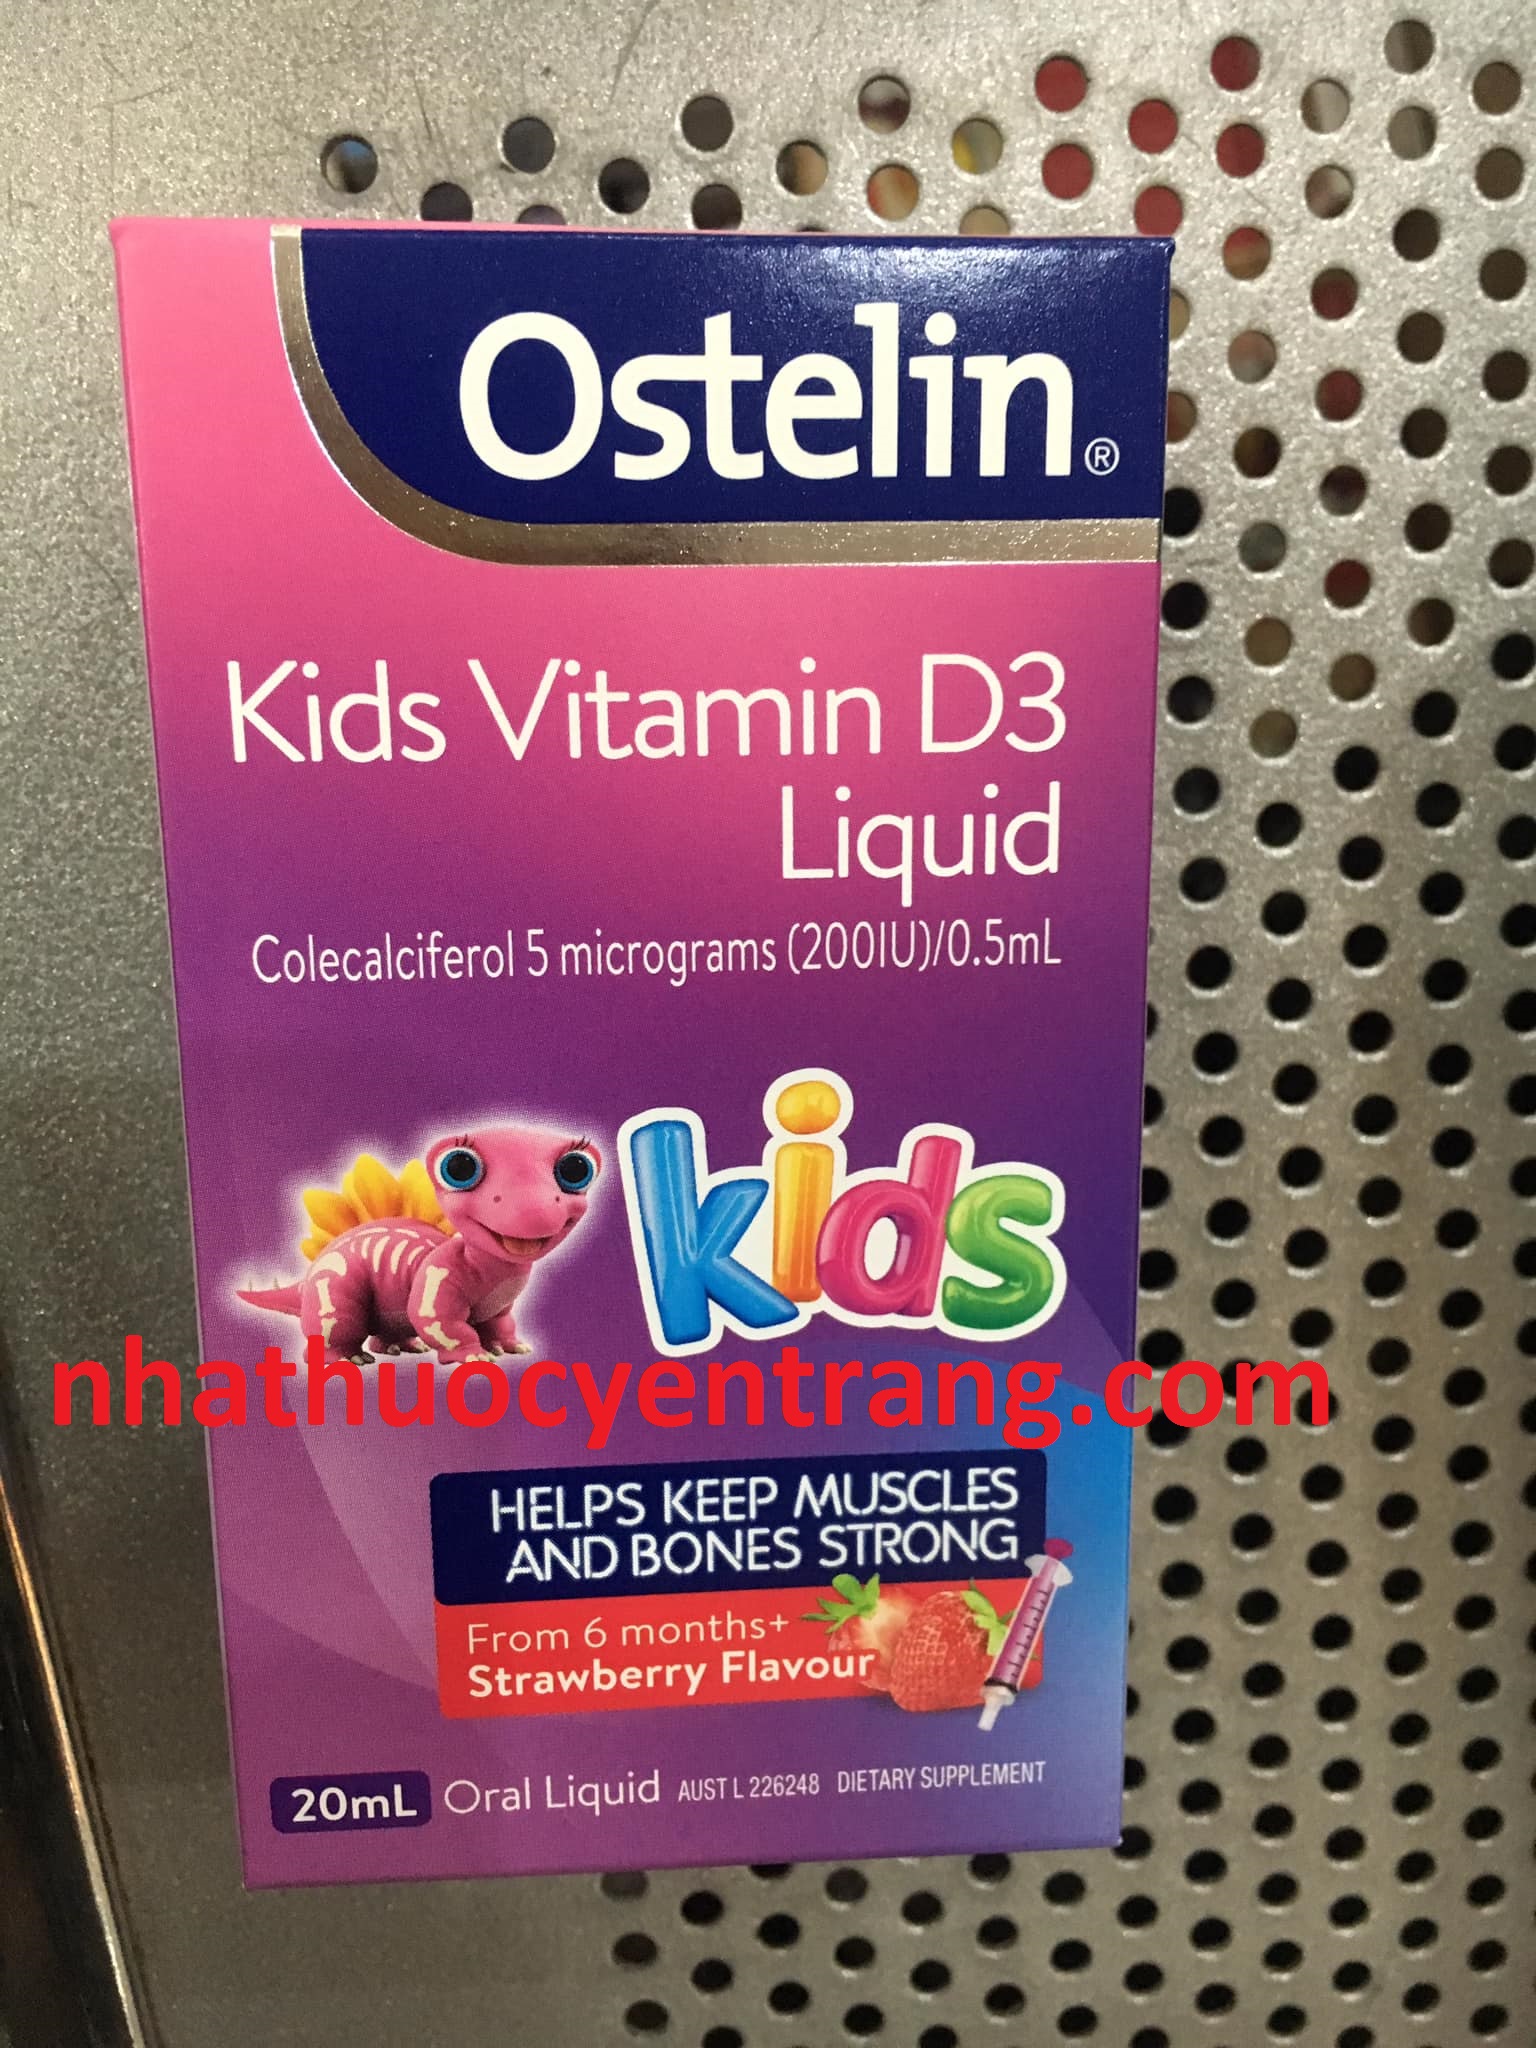 Ostelin Kids Vitamin D3